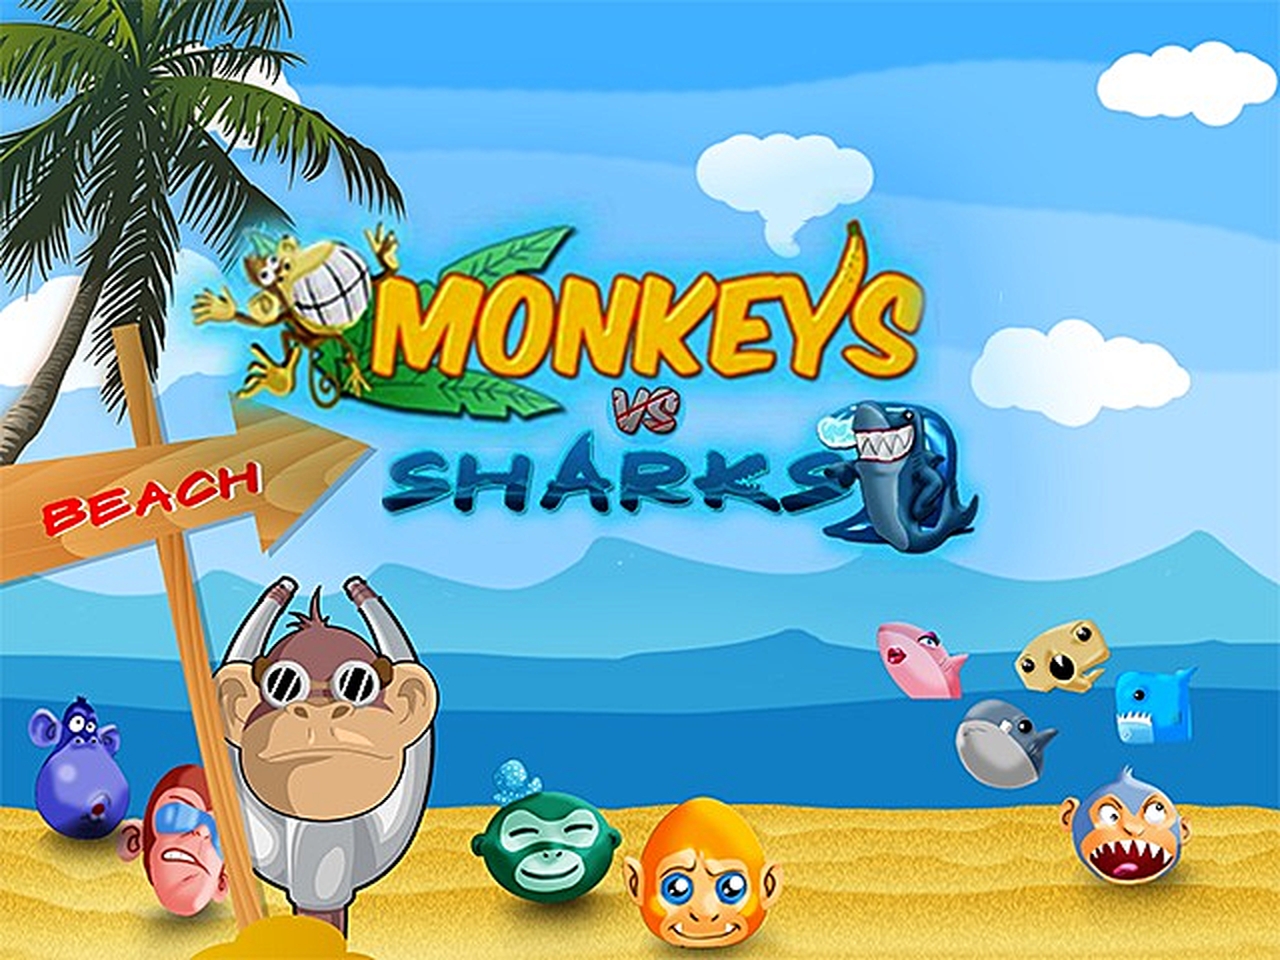 Monkeys vs Sharks HD